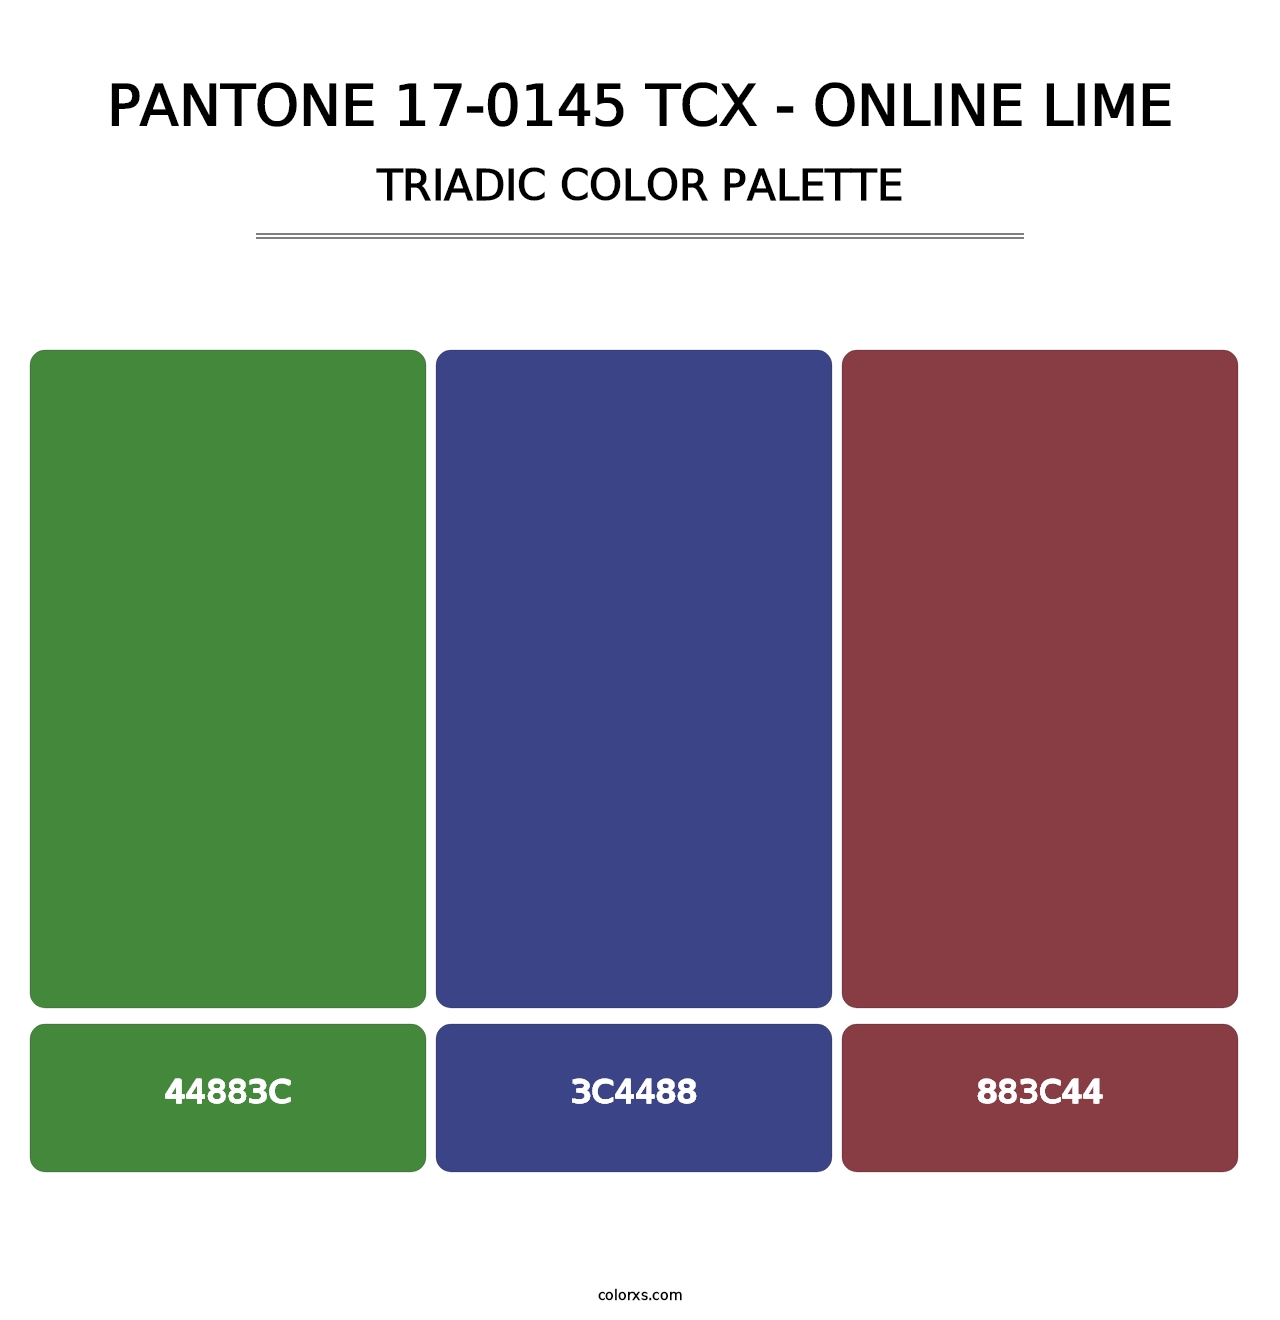 PANTONE 17-0145 TCX - Online Lime - Triadic Color Palette